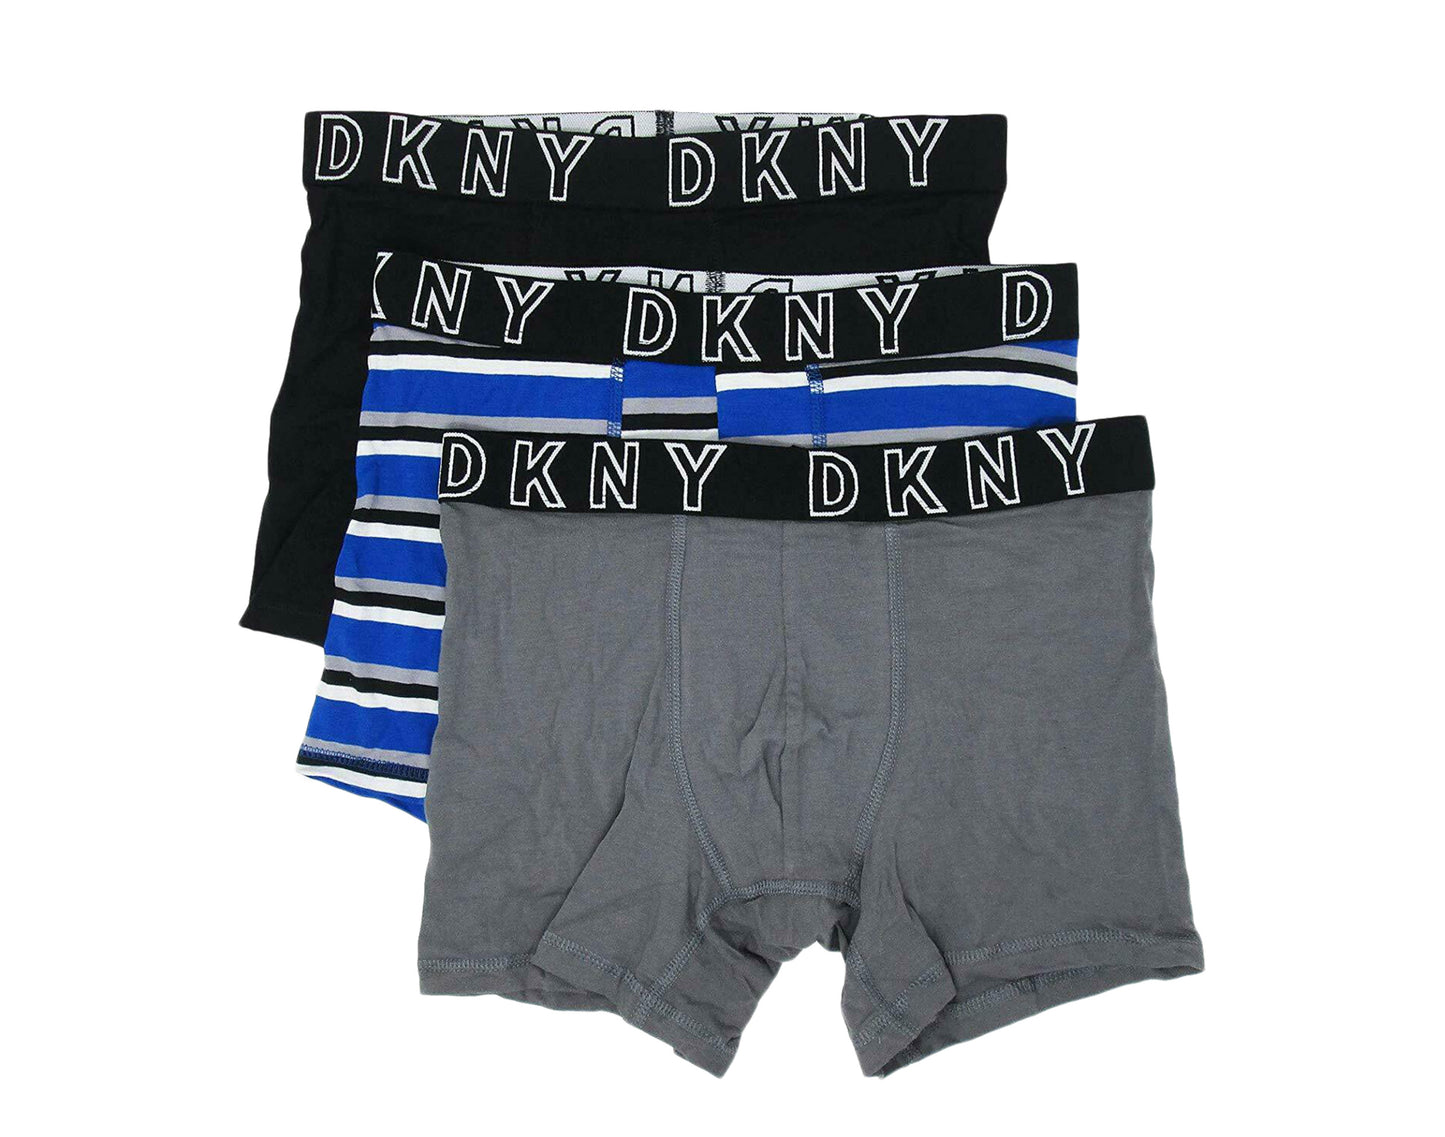 DKNY Cotton Stretch Boxer Briefs Black/Stripe/Lead Underwear (3 Pack) 3205552401-01292